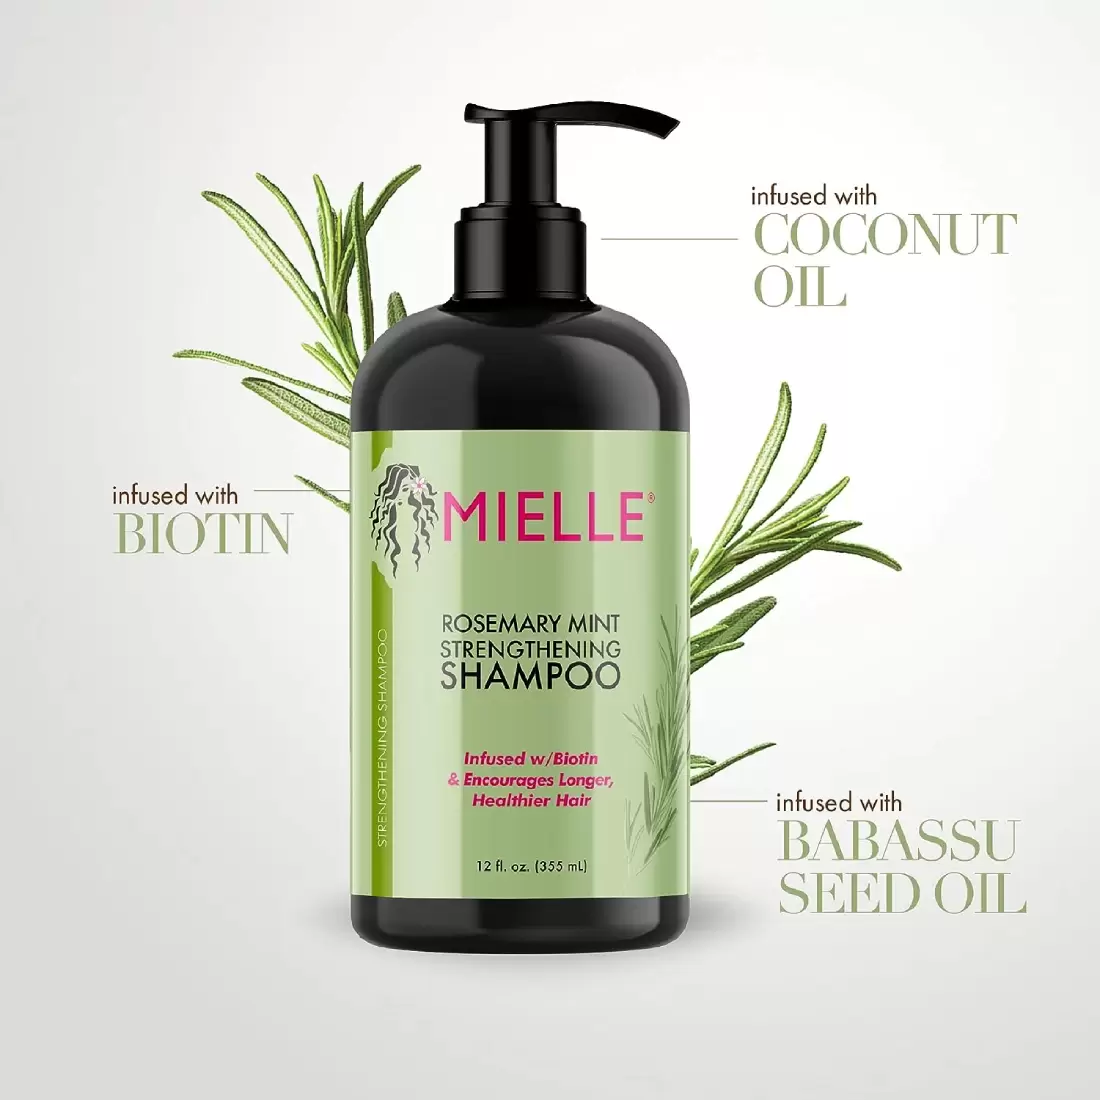 شامپو رزماری Mielle-شامپو ضد ریزش رزماری مییله-شامپو رزماری میله-شامپو تقویت کننده رزماری Mielle-Mielle Rosemary Mint Strengthening Shampoo-محصولات برند میله